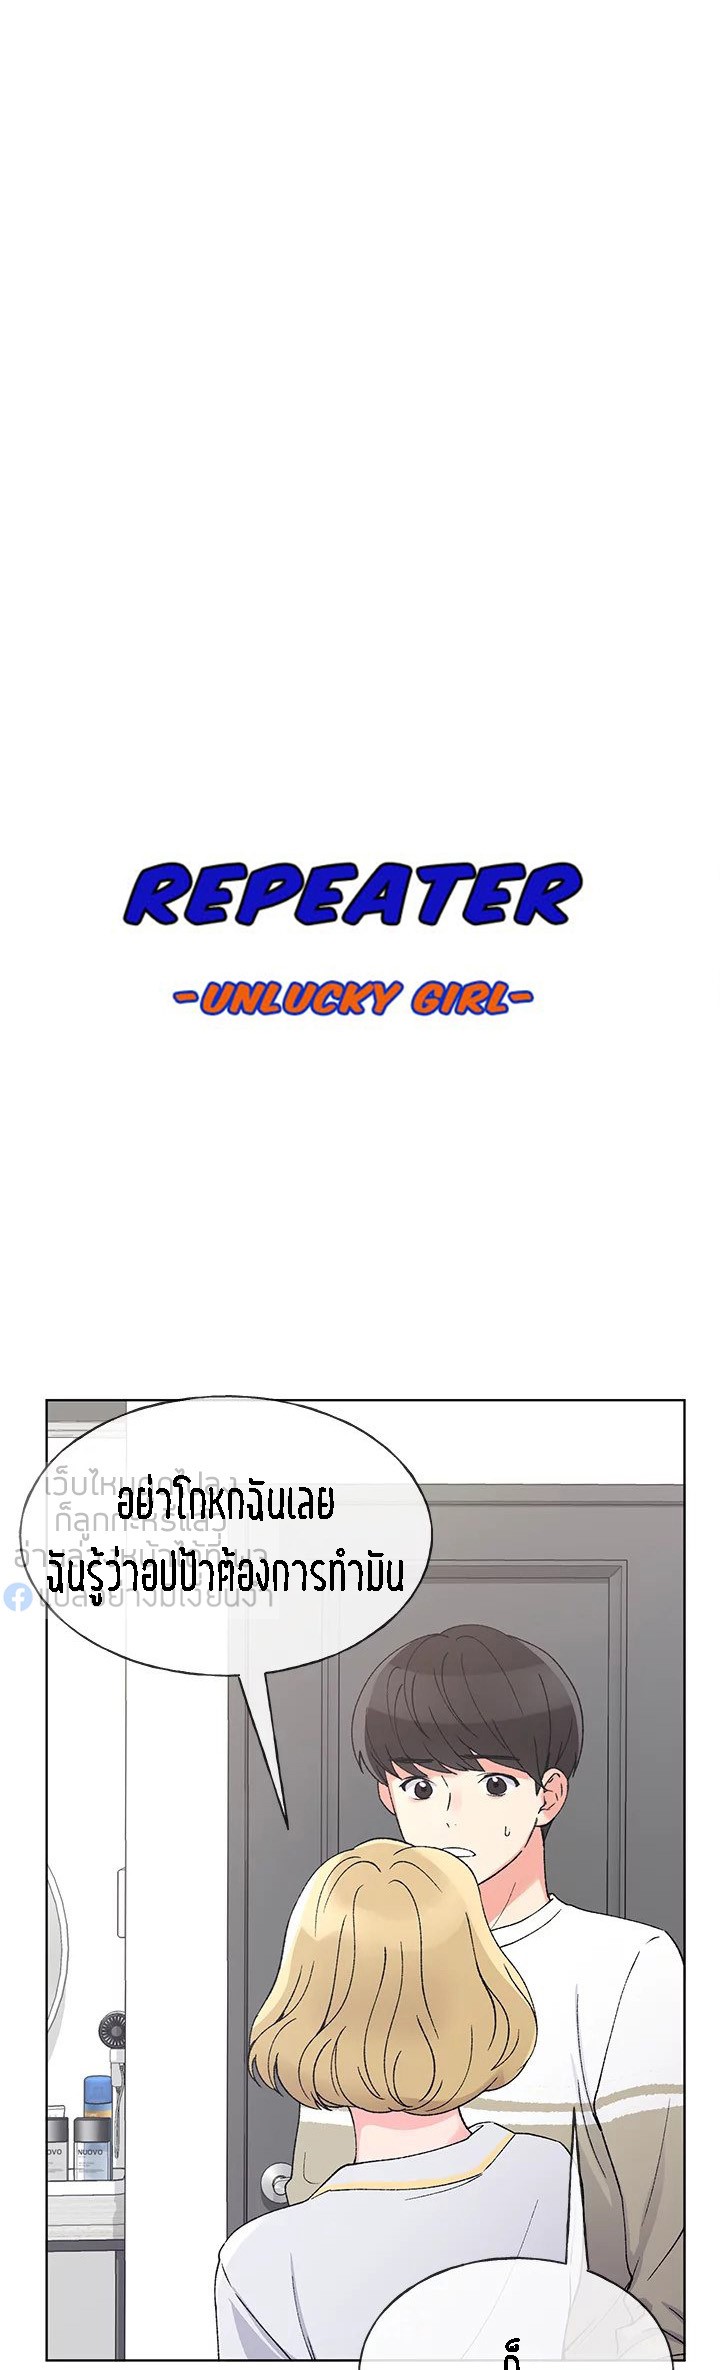 Repeater 52 01